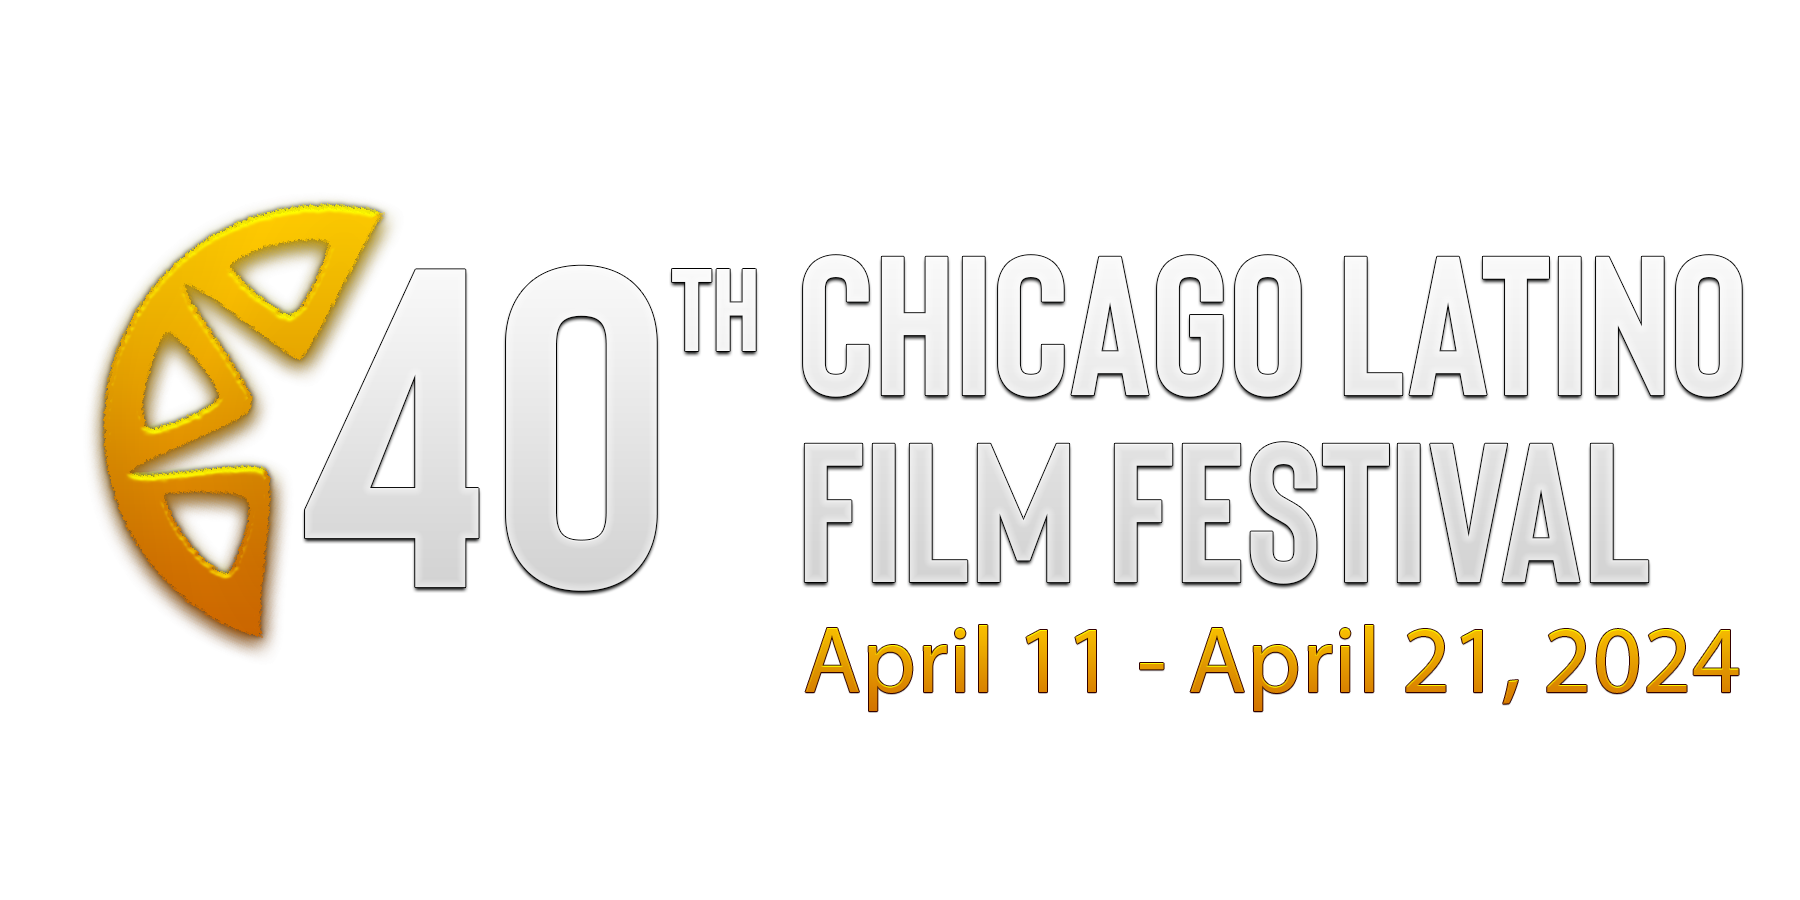 Current Season – Chicago Film Society